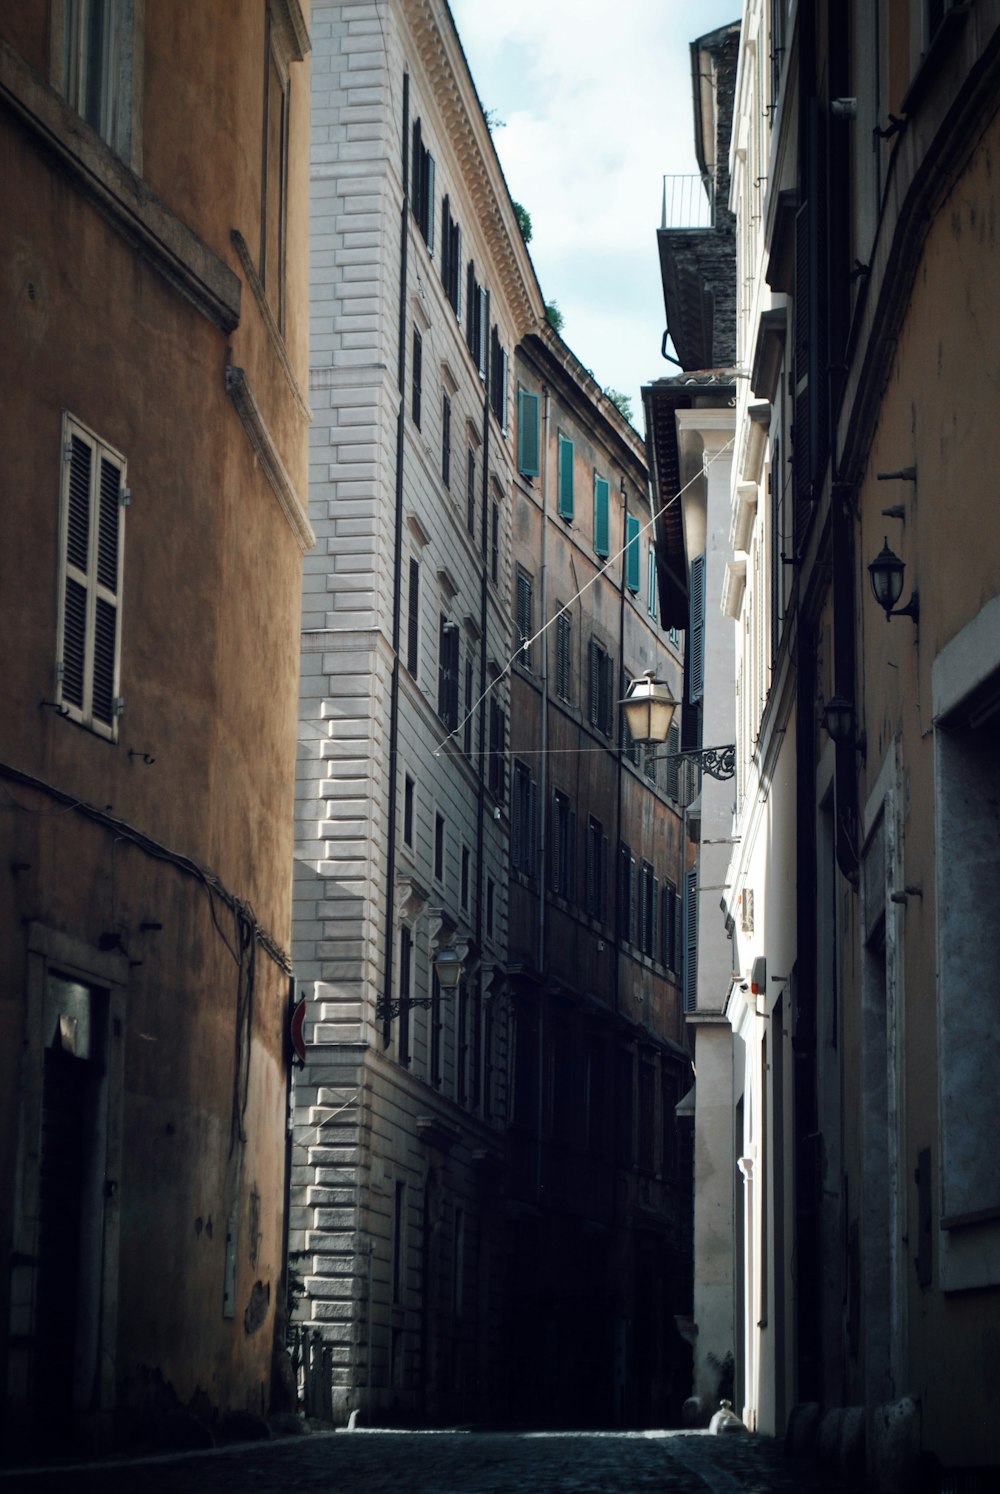 a narrow alley way in a european city